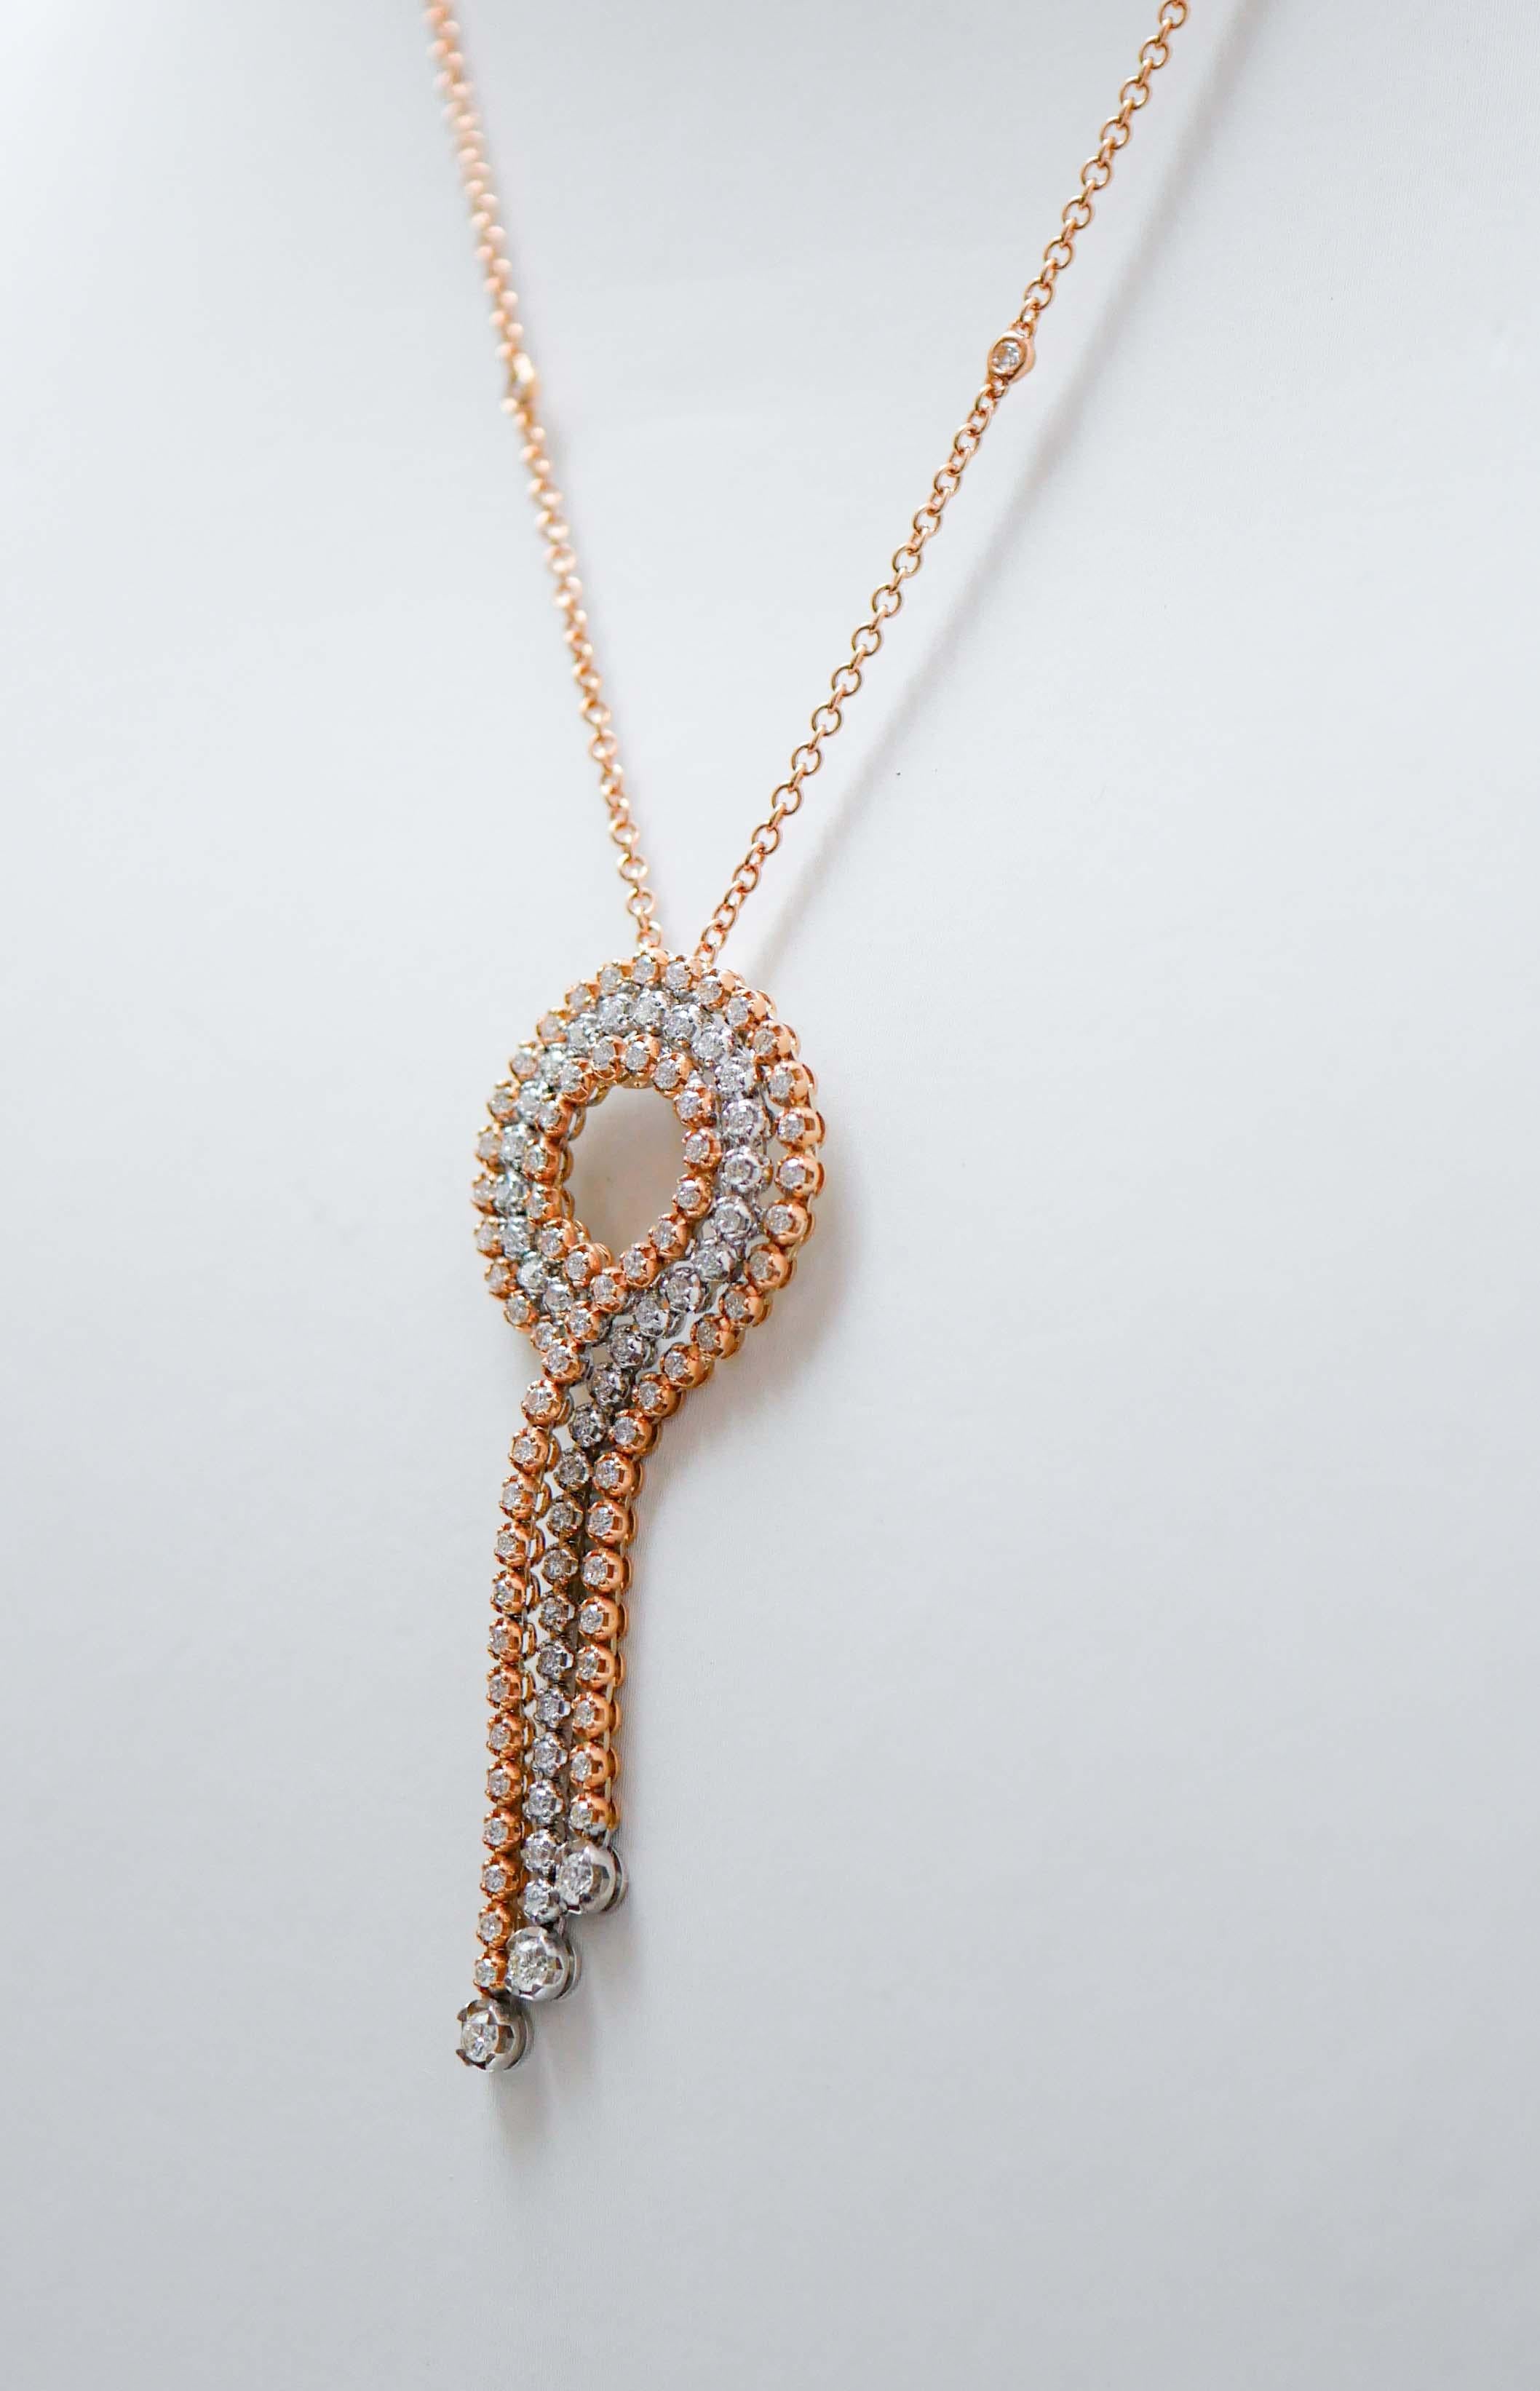 Modern Diamonds, 18 Karat Rose Gold and White Gold Pendant Necklace.